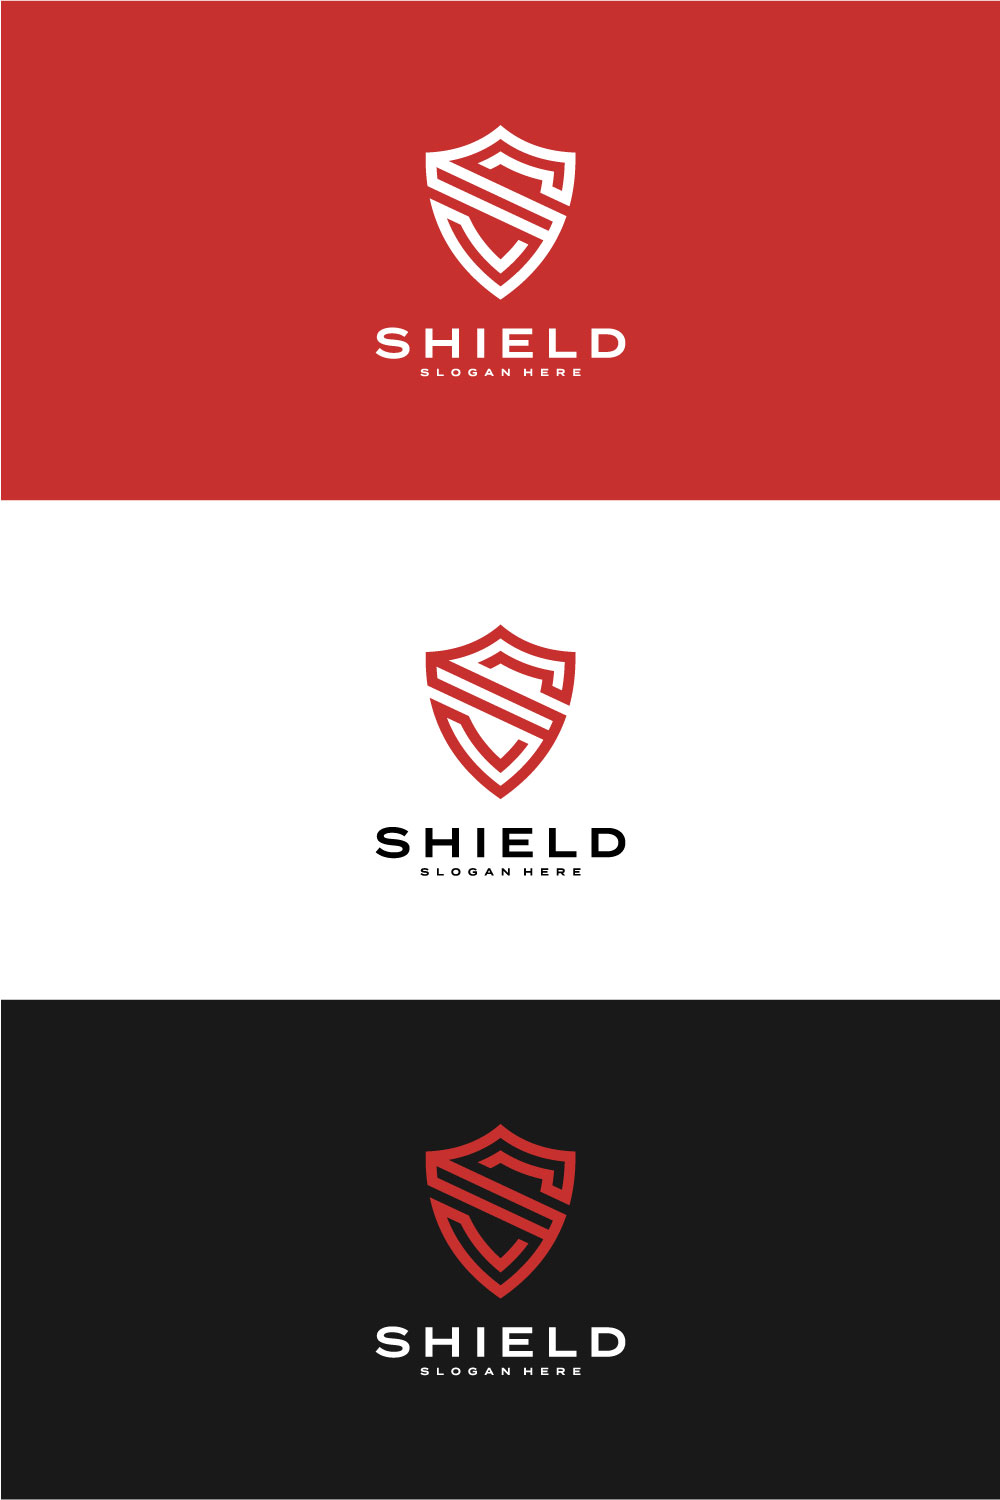 Initial Letters Shaped Shield Logo Vector Design Pinterest Image.